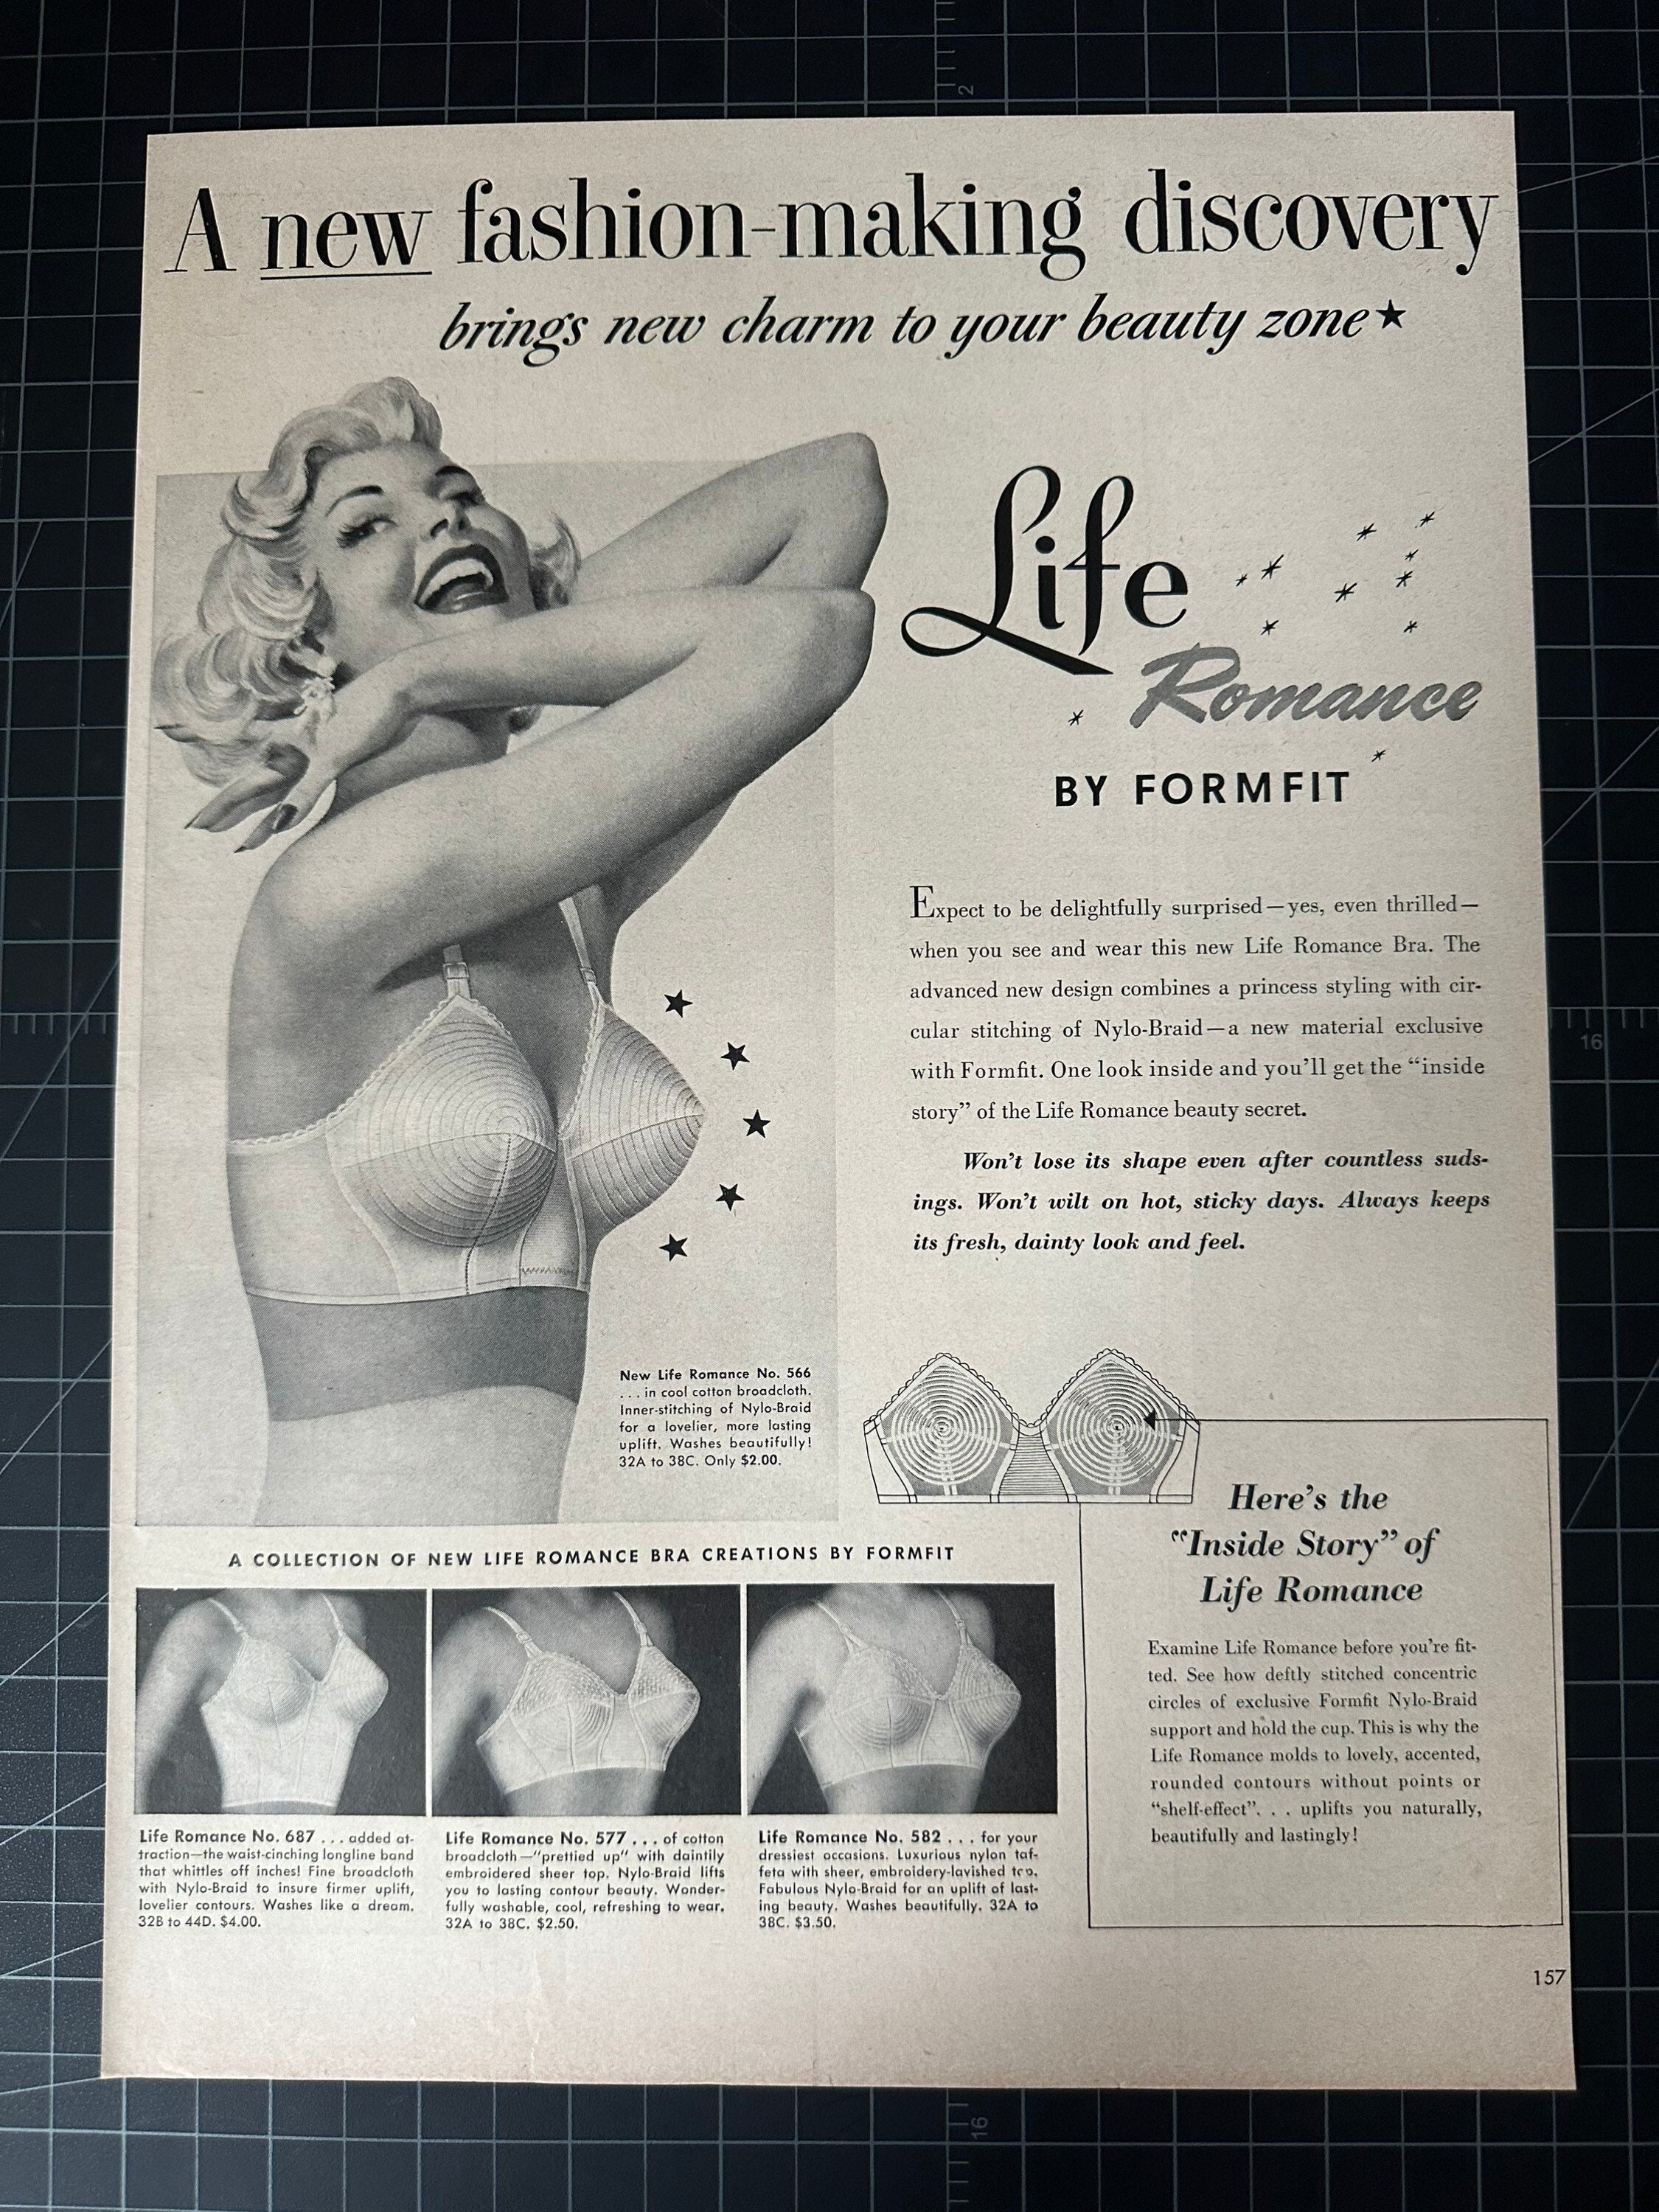 Life-Bra (1947) : r/vintageads